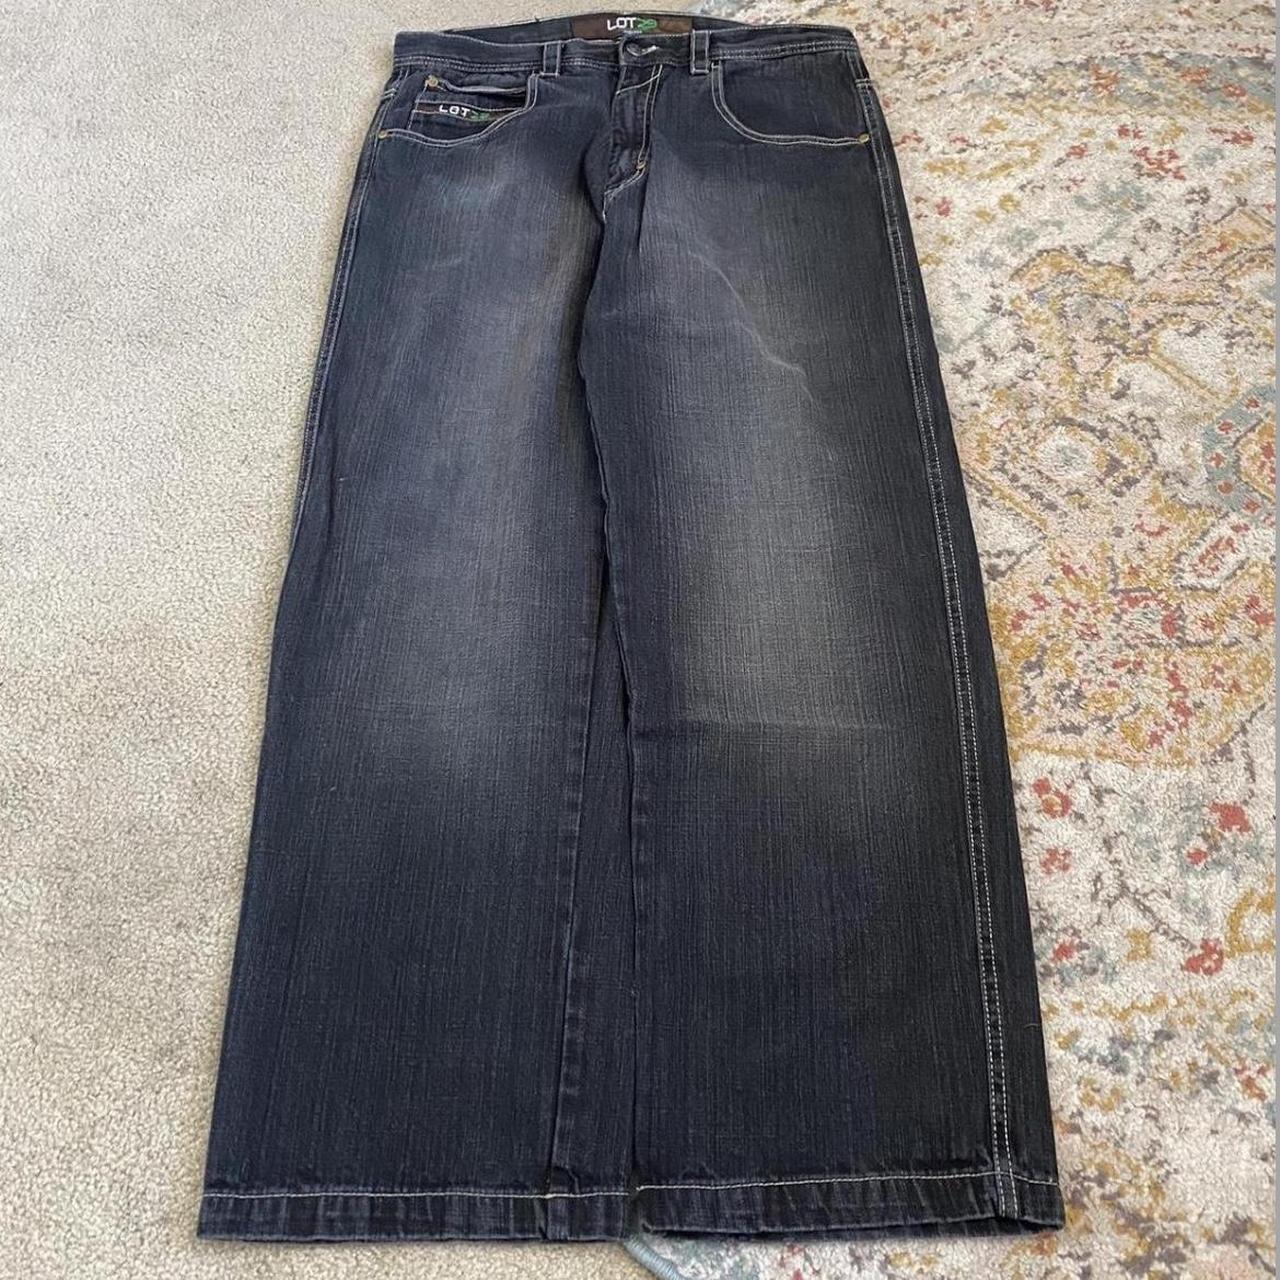 Baggy lot29 jeans fit like southpoles leg... - Depop